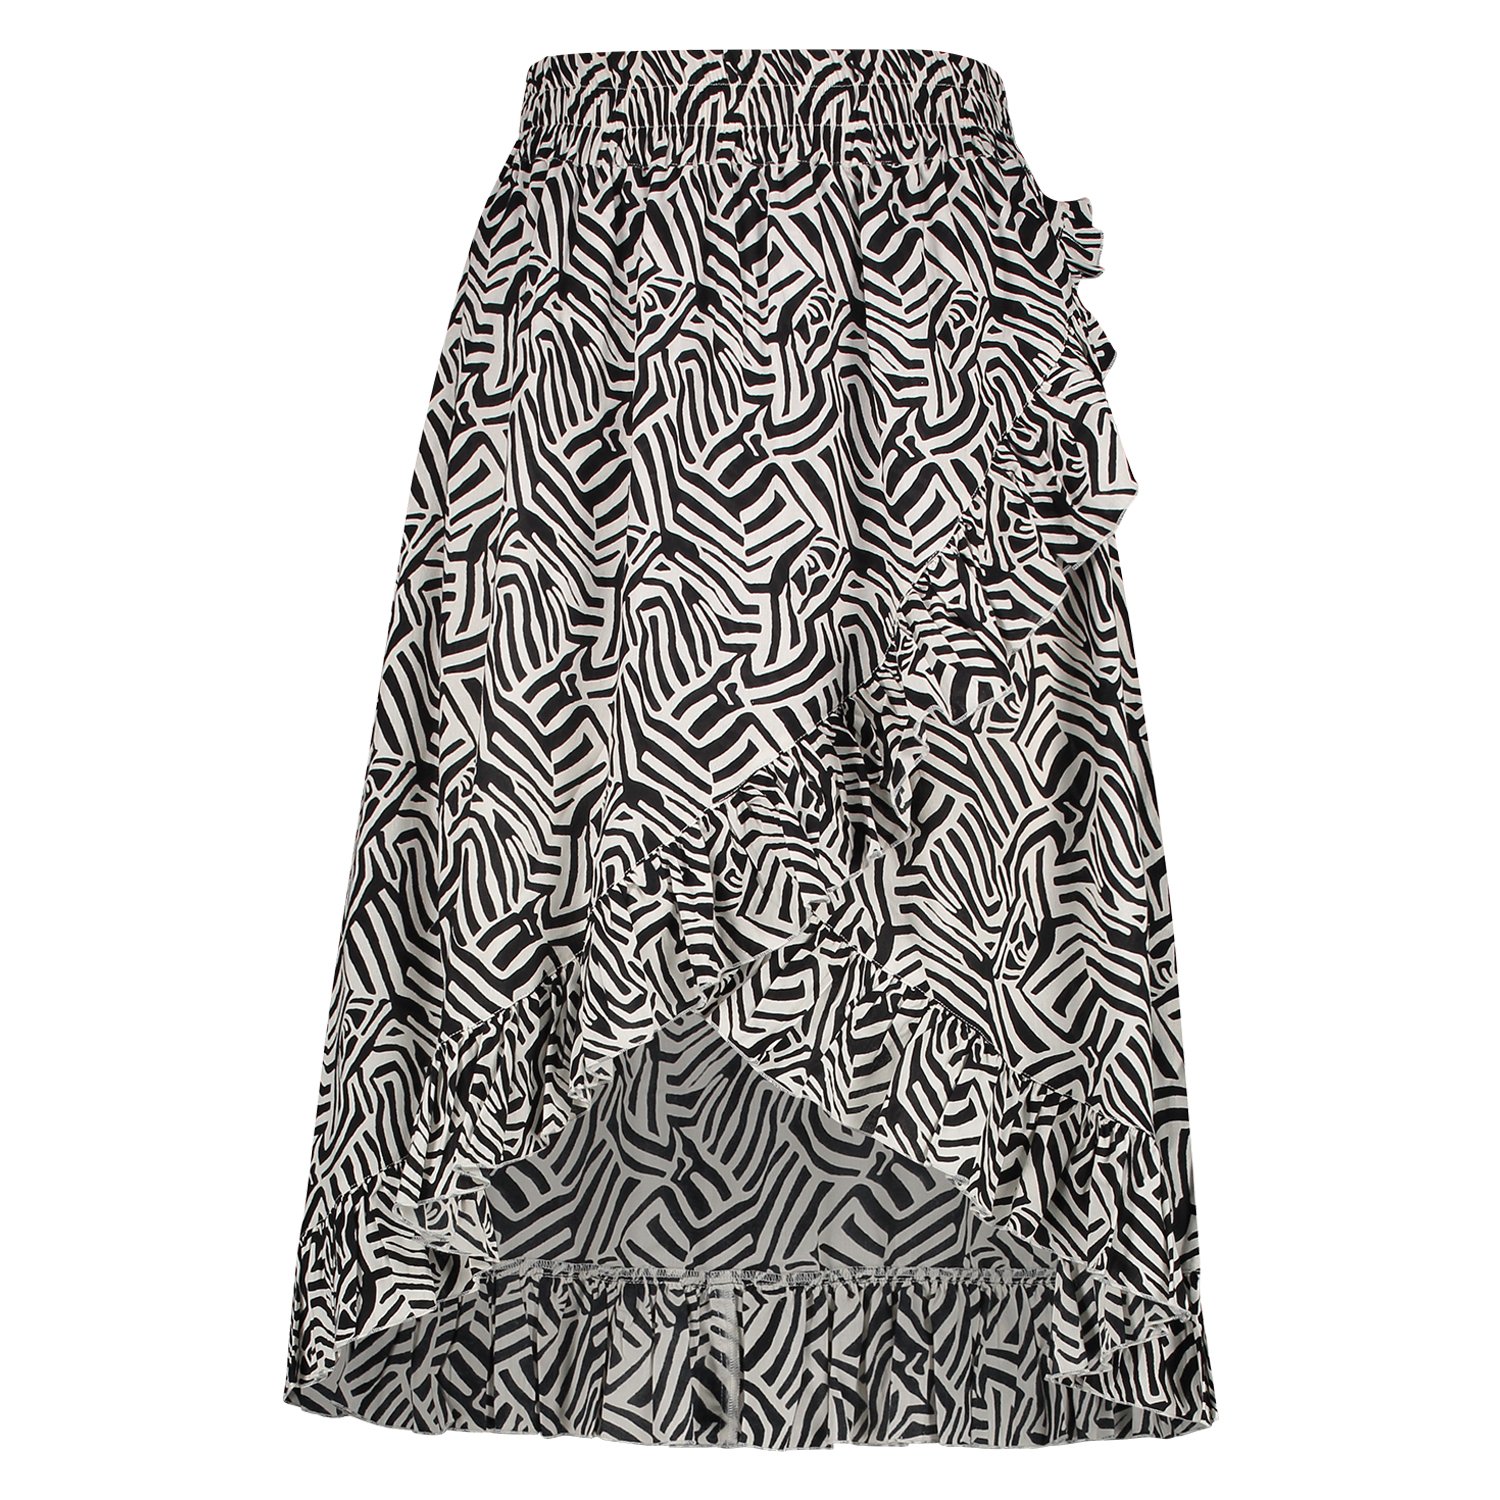 OSCAR & JANE Skirt Annika Graphic Zebra